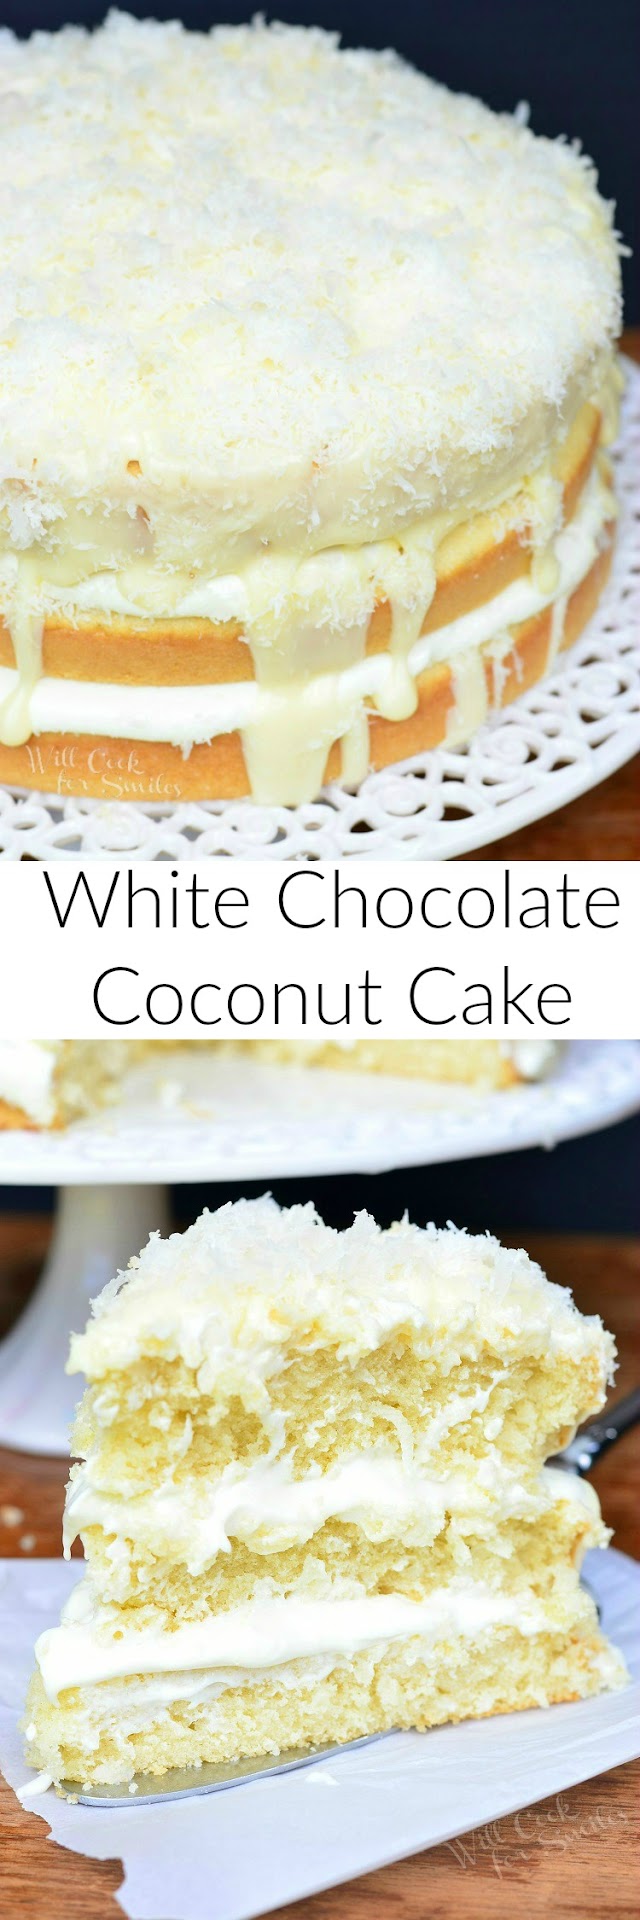 White Chocolate Coconut Cake Recipe